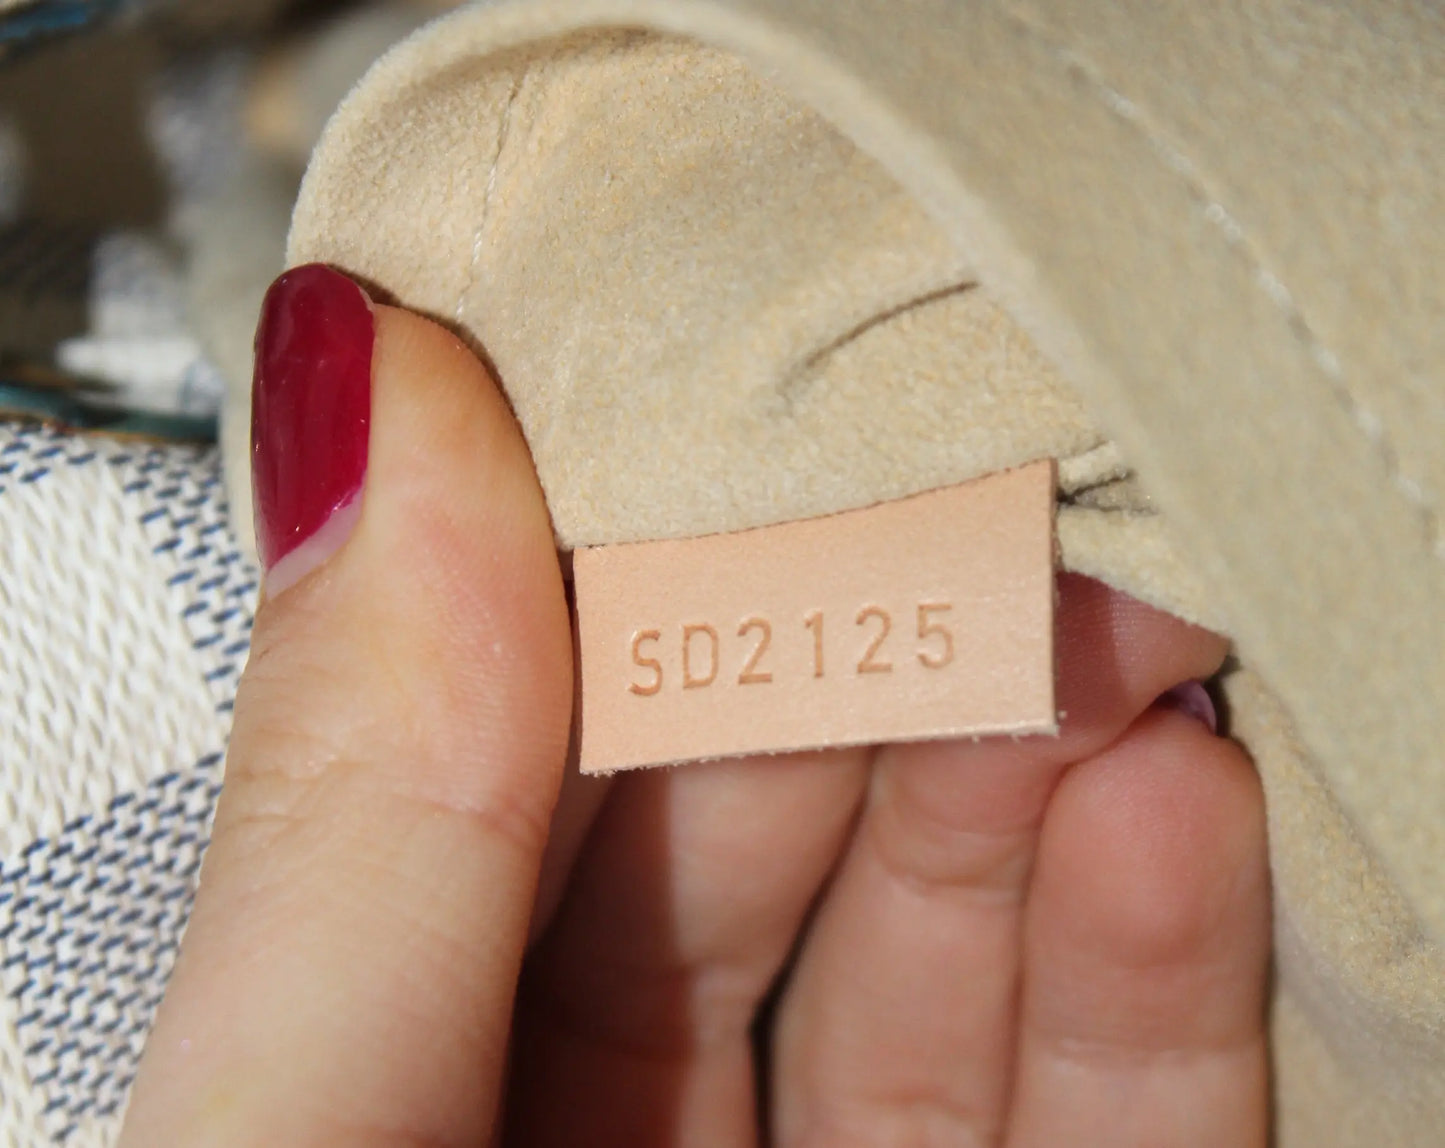 Louis Vuitton SD date code – Bagaholic